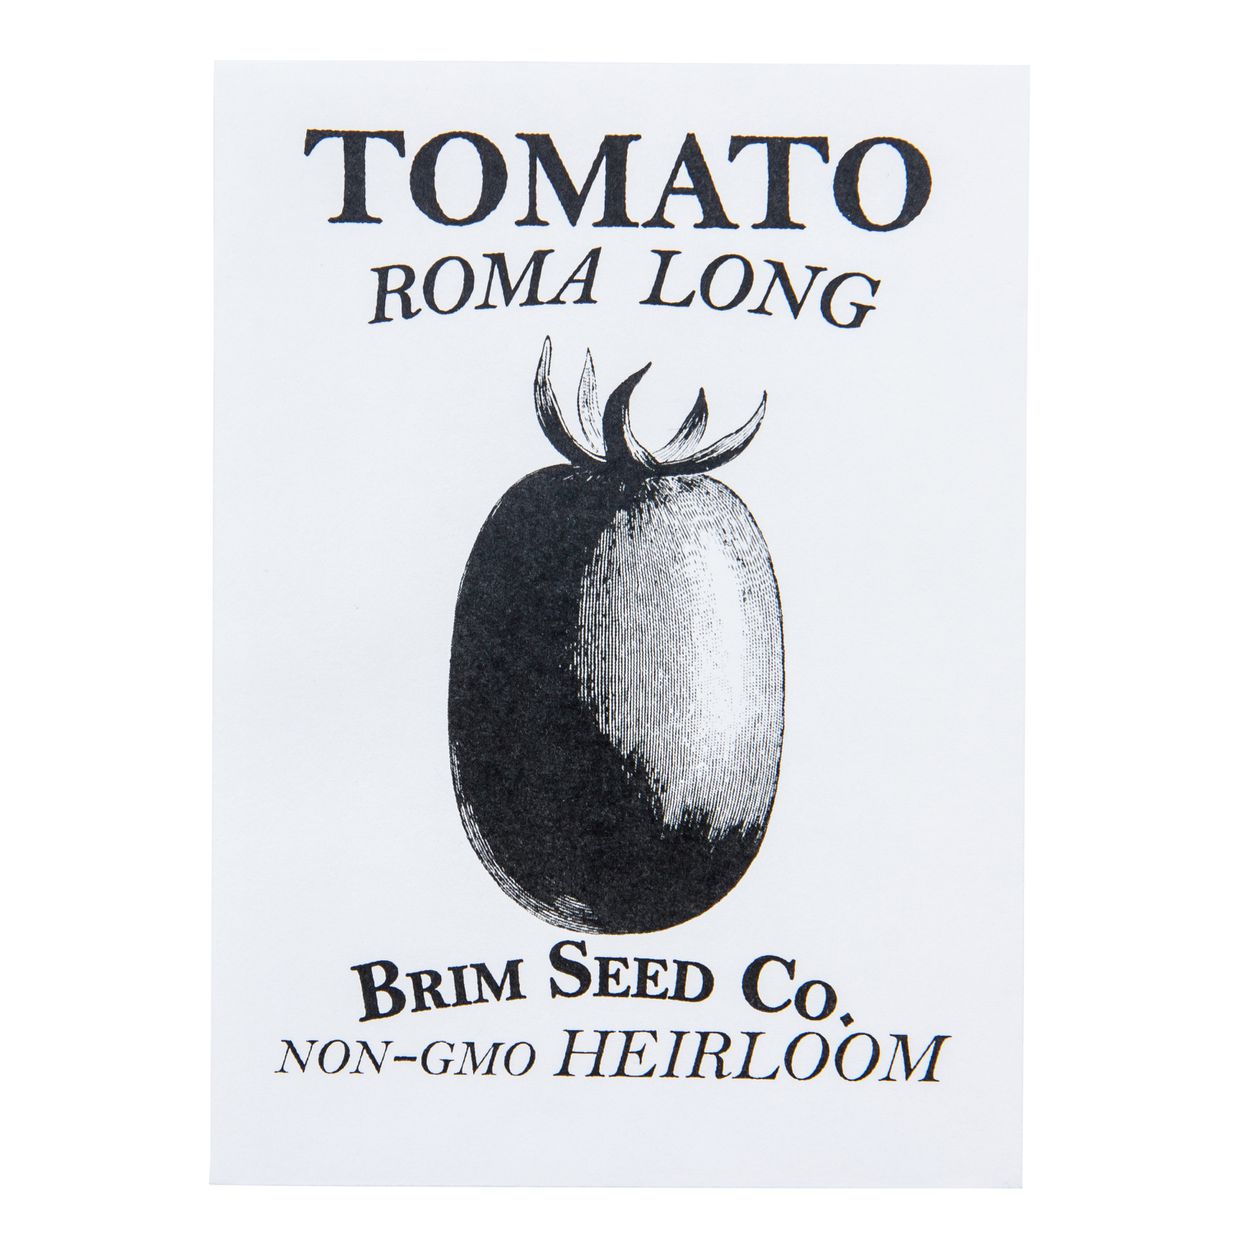 Brim Seed Co. - Roma Long Tomato Heirloom Seed